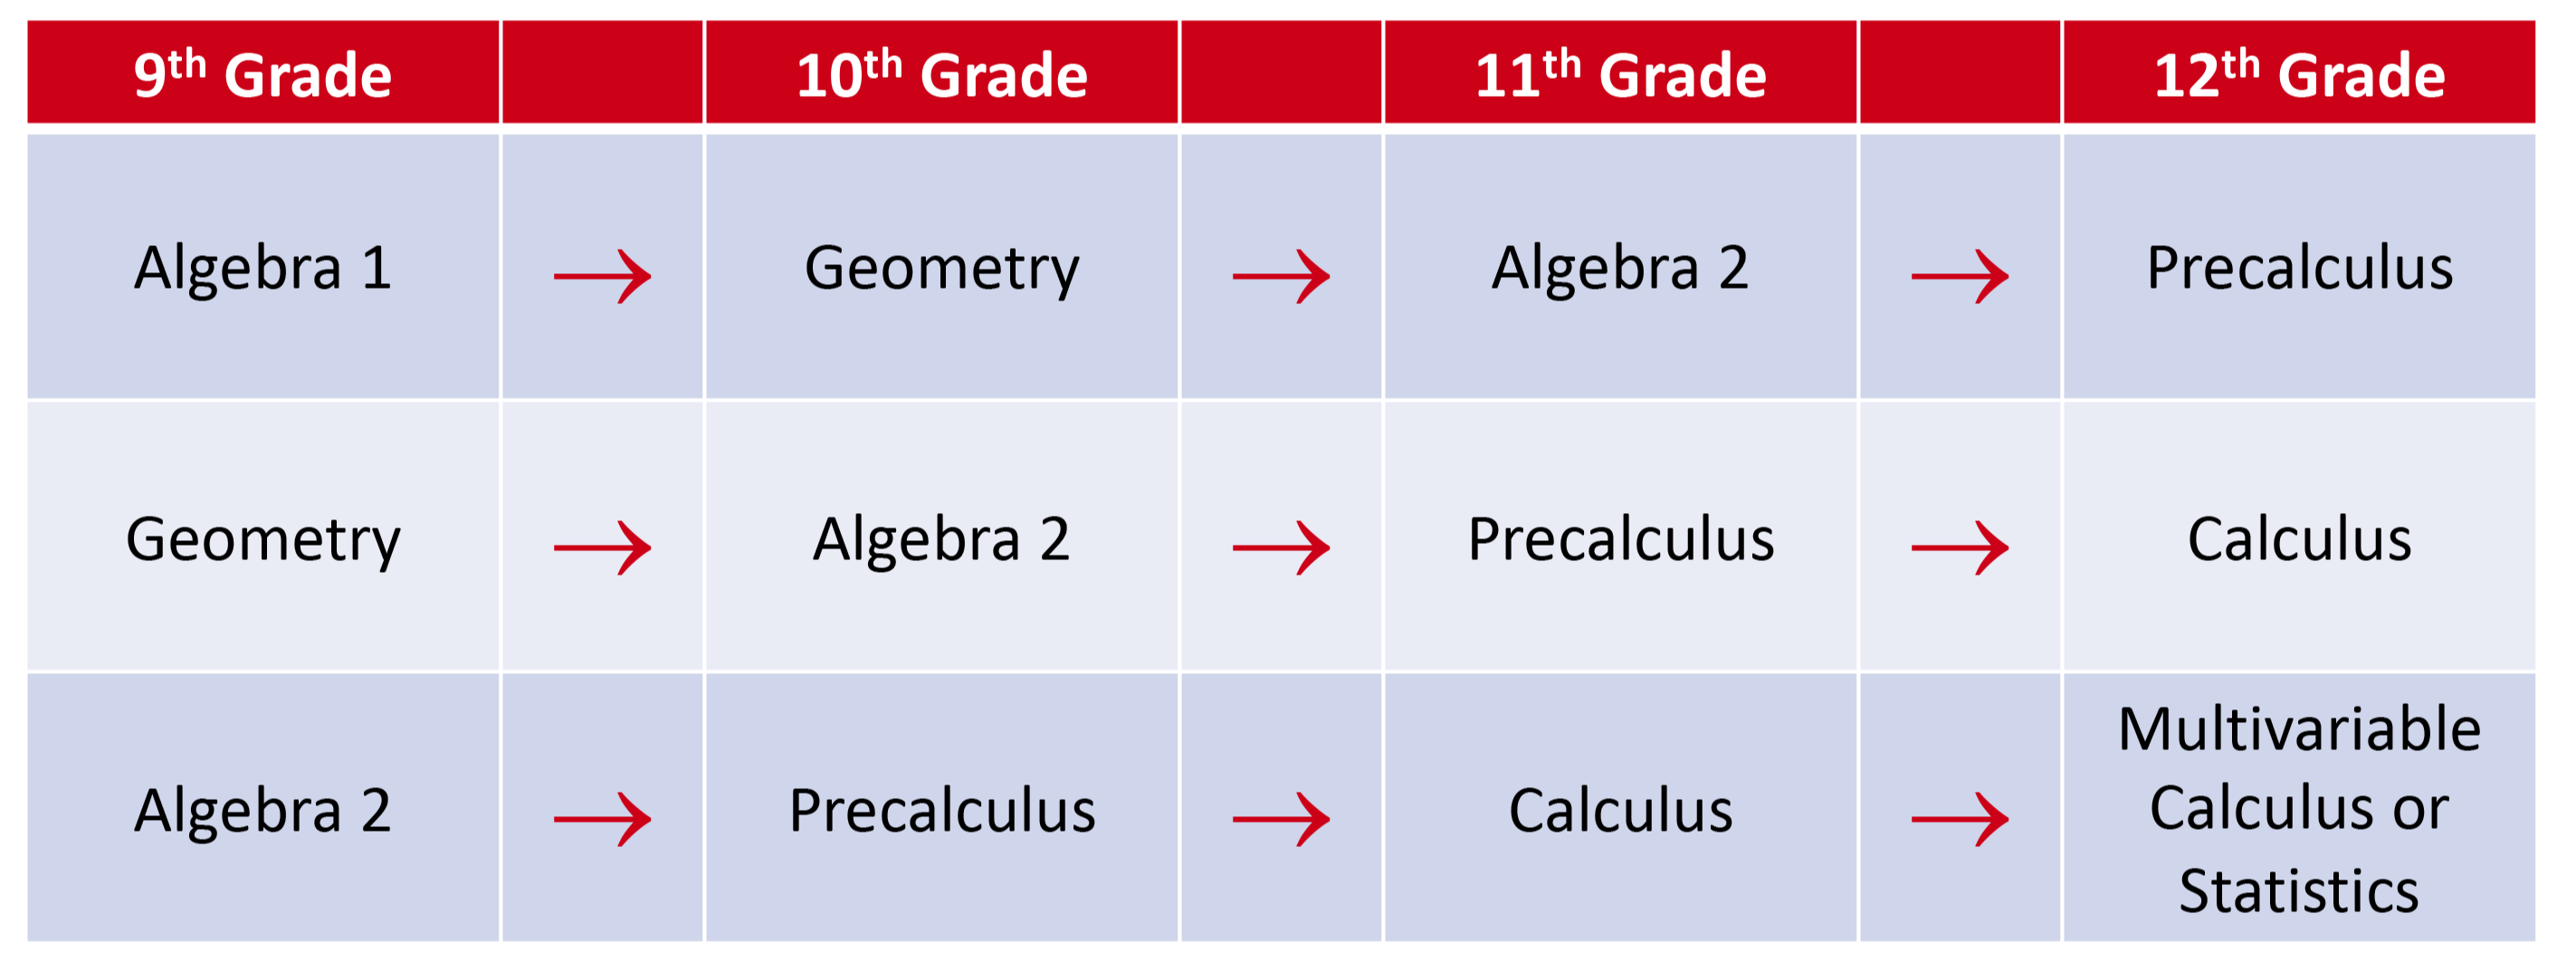 math progression of classes by grade level 